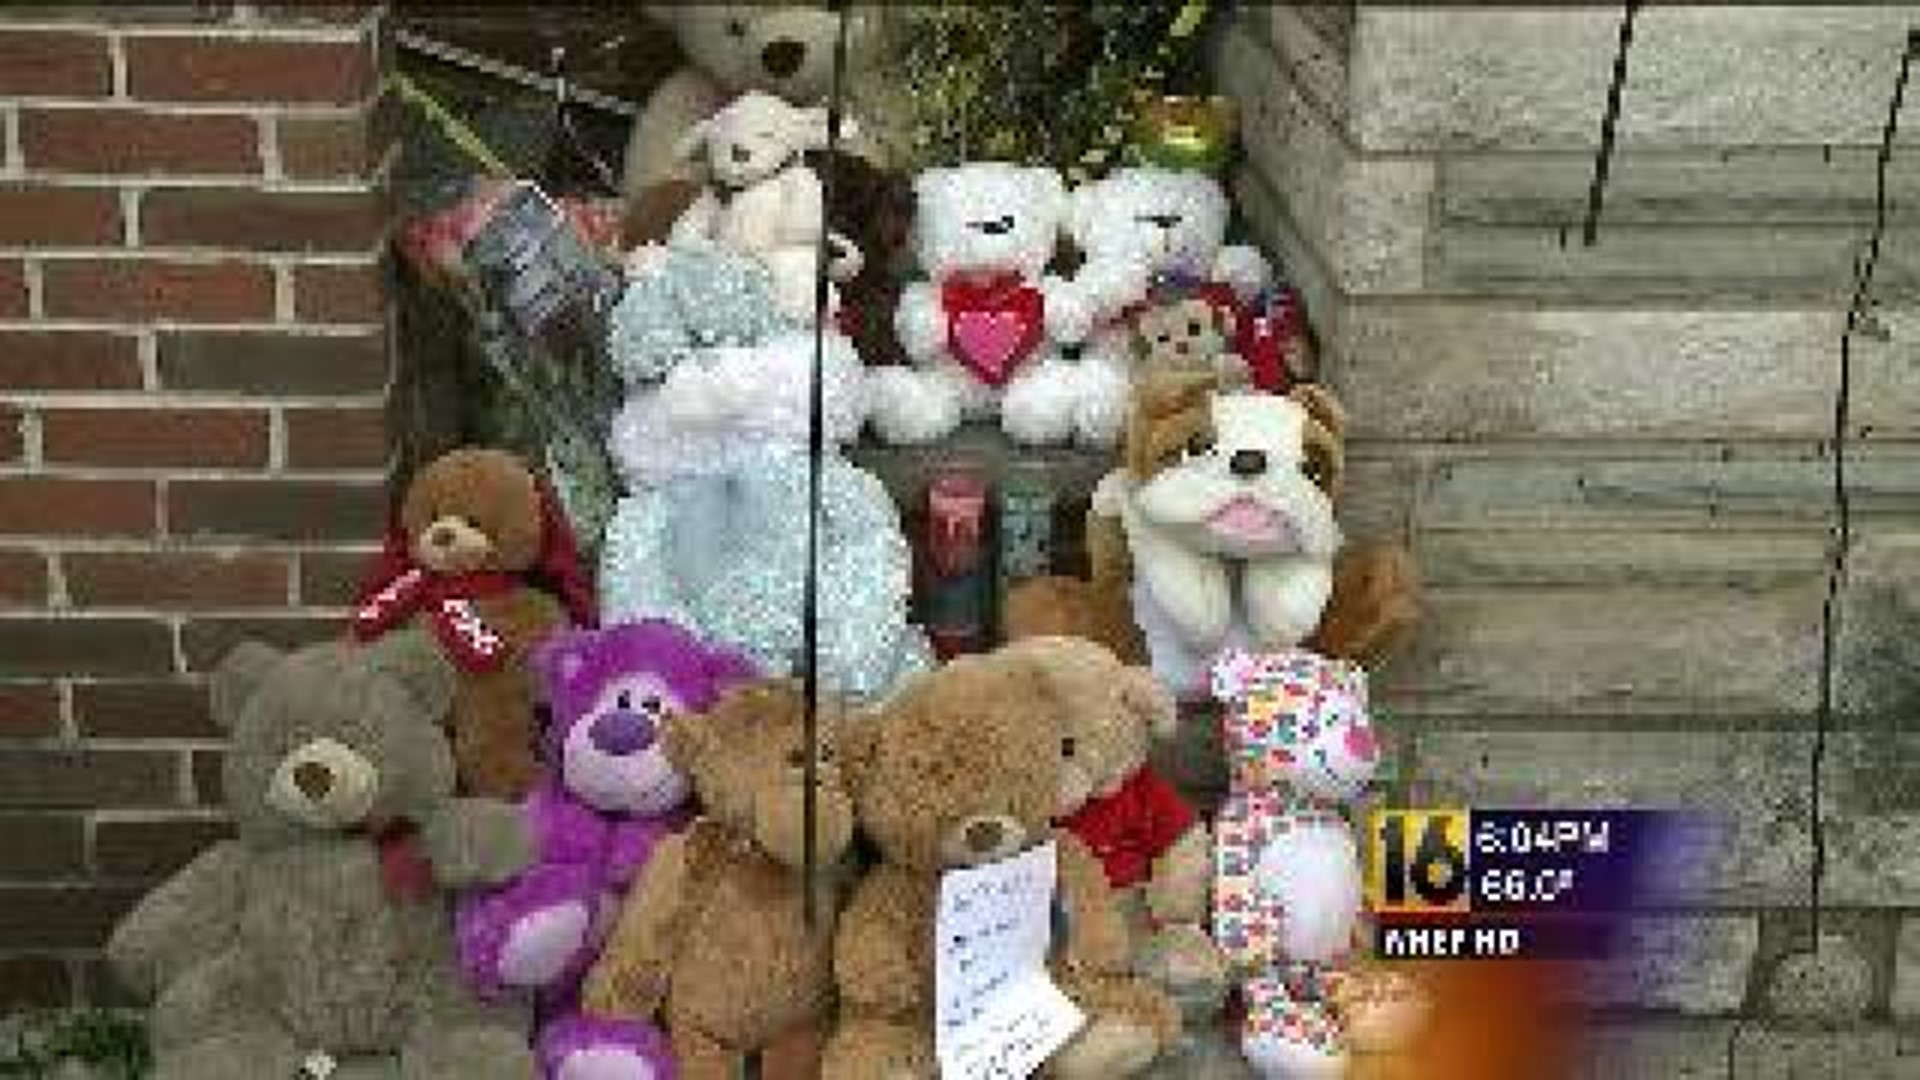 Memorial Grows at Scene of Shenandoah Tragedy